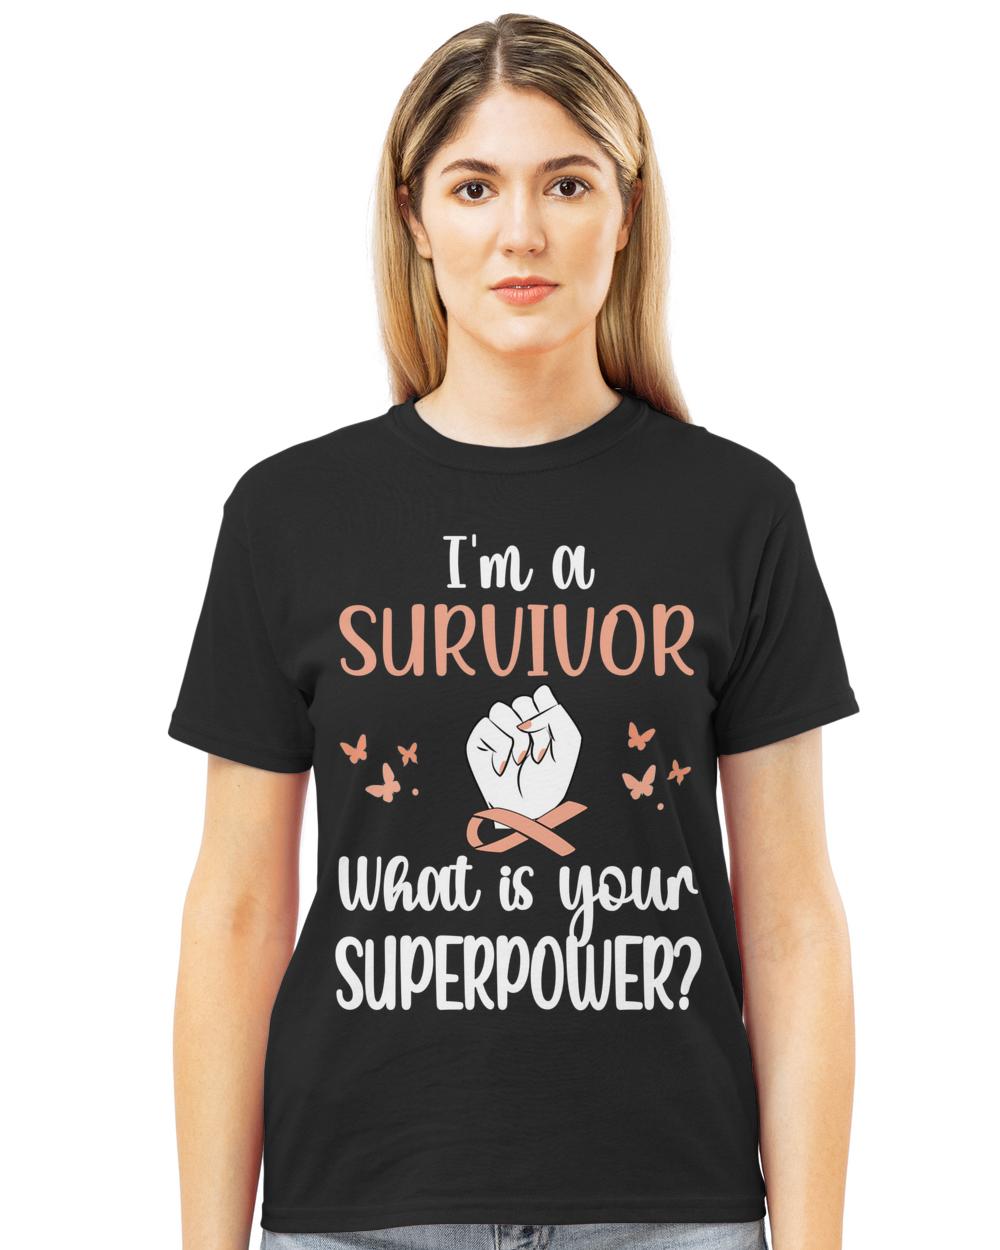 Uterine Cancer Survivor Endometrial Cancer Ribbon T-Shirt